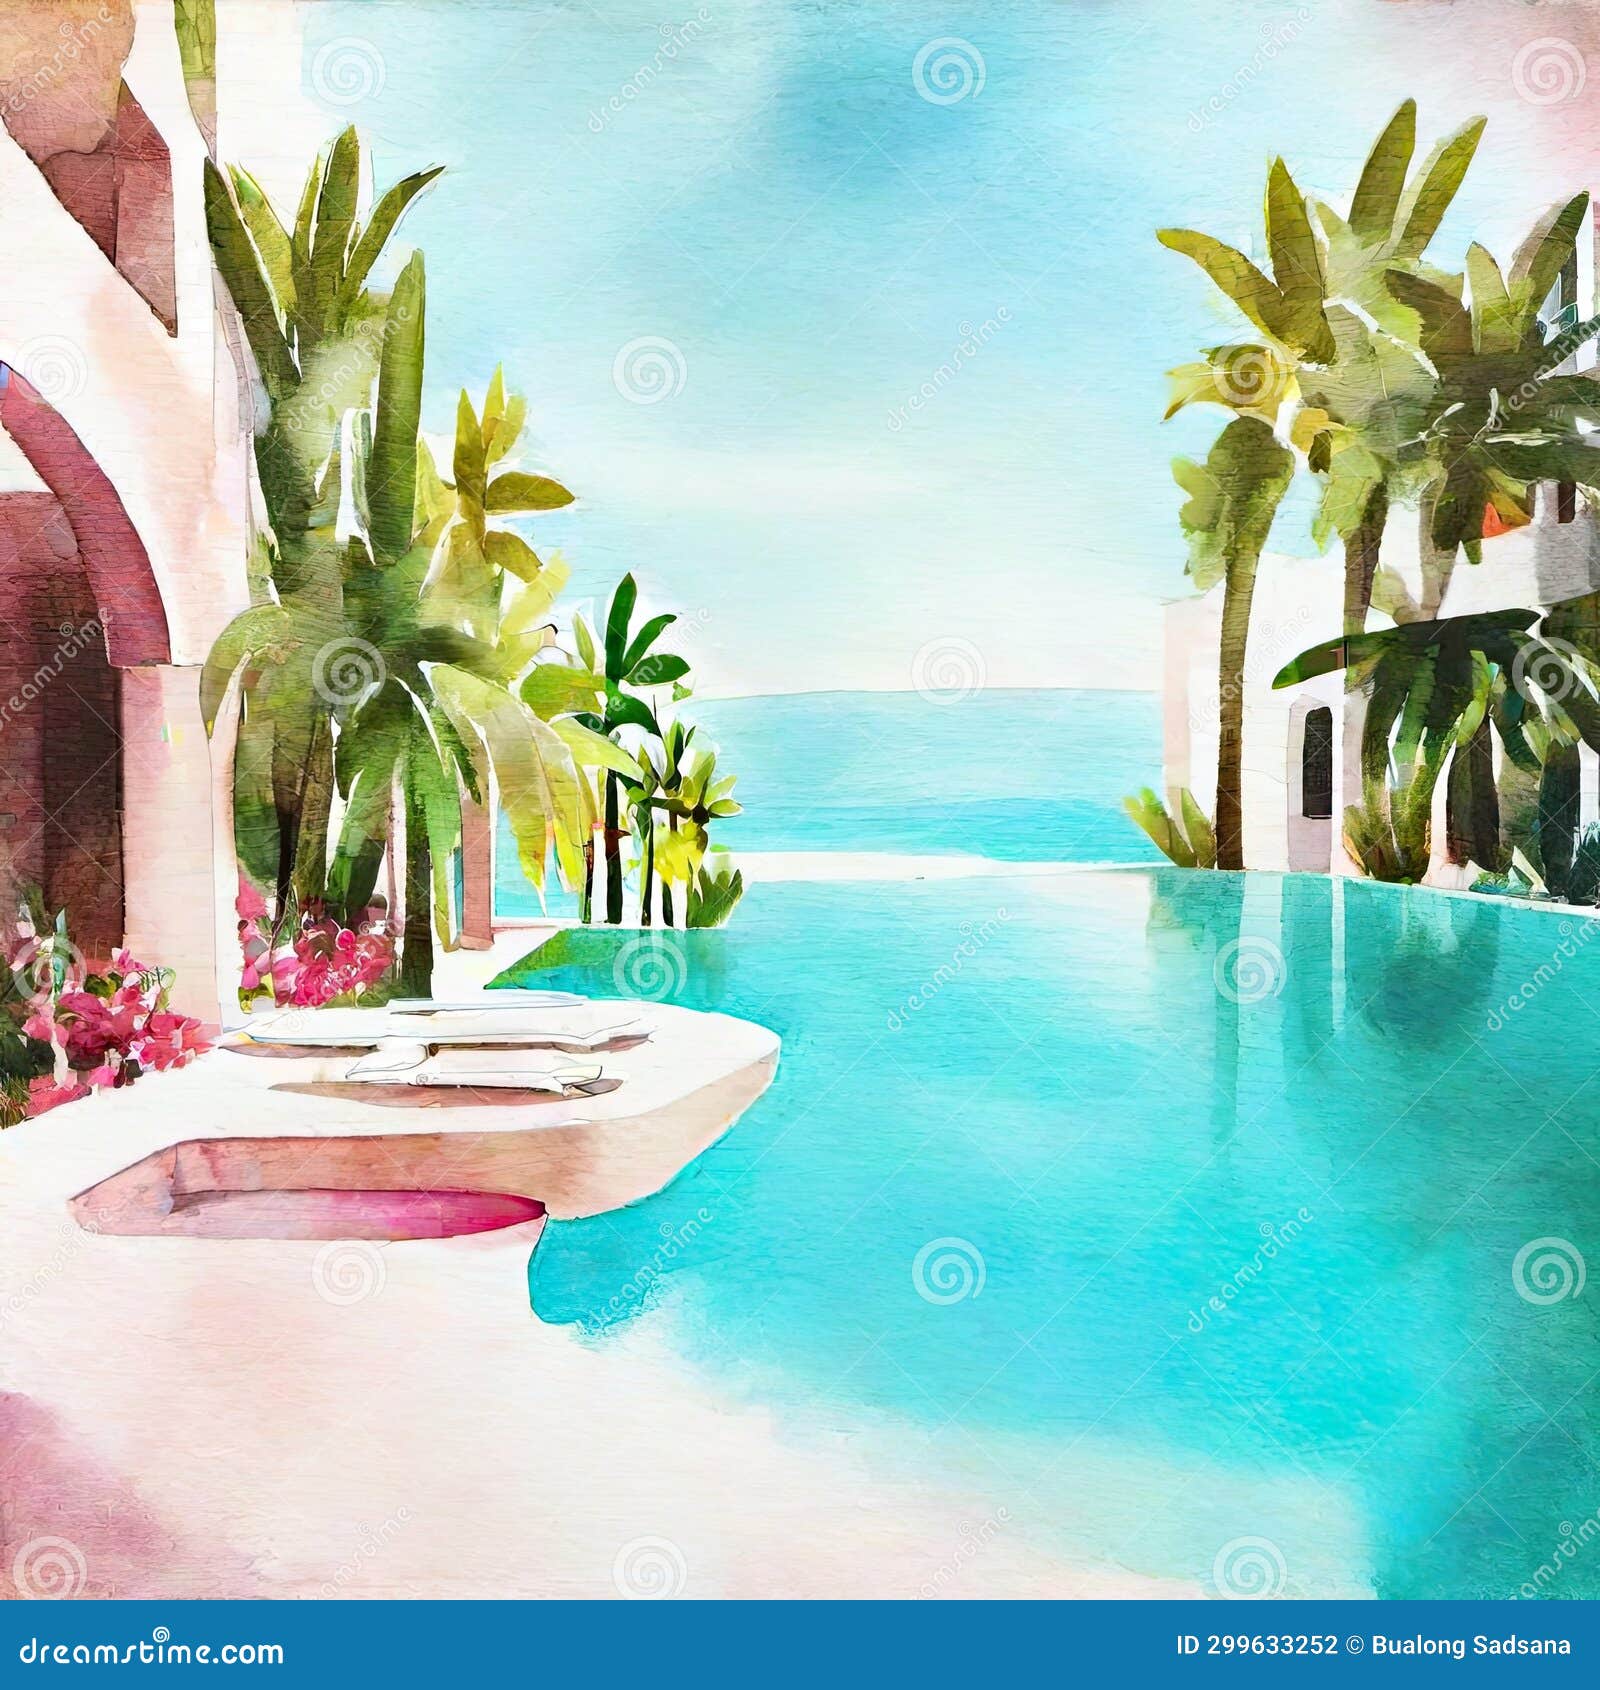 watercolor of product display piscina de lujo background piscina agua turquesa y palmeras ia generativa